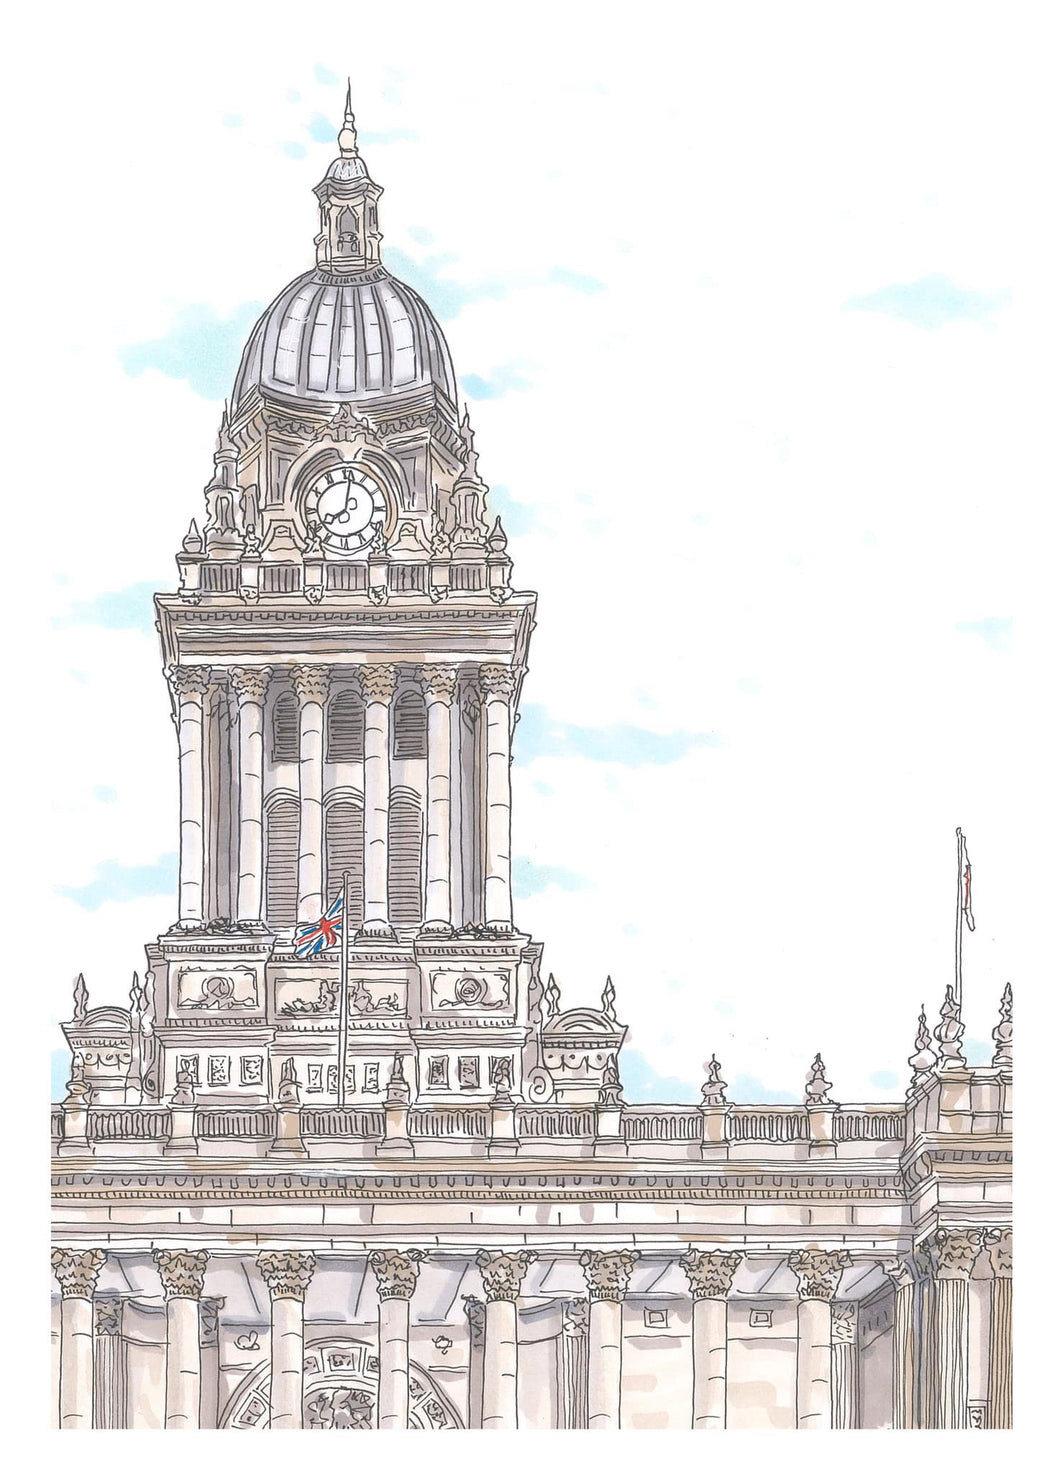 Leeds Town Hall Illustration - A4 print - Art by Arjo - Leeds artwork